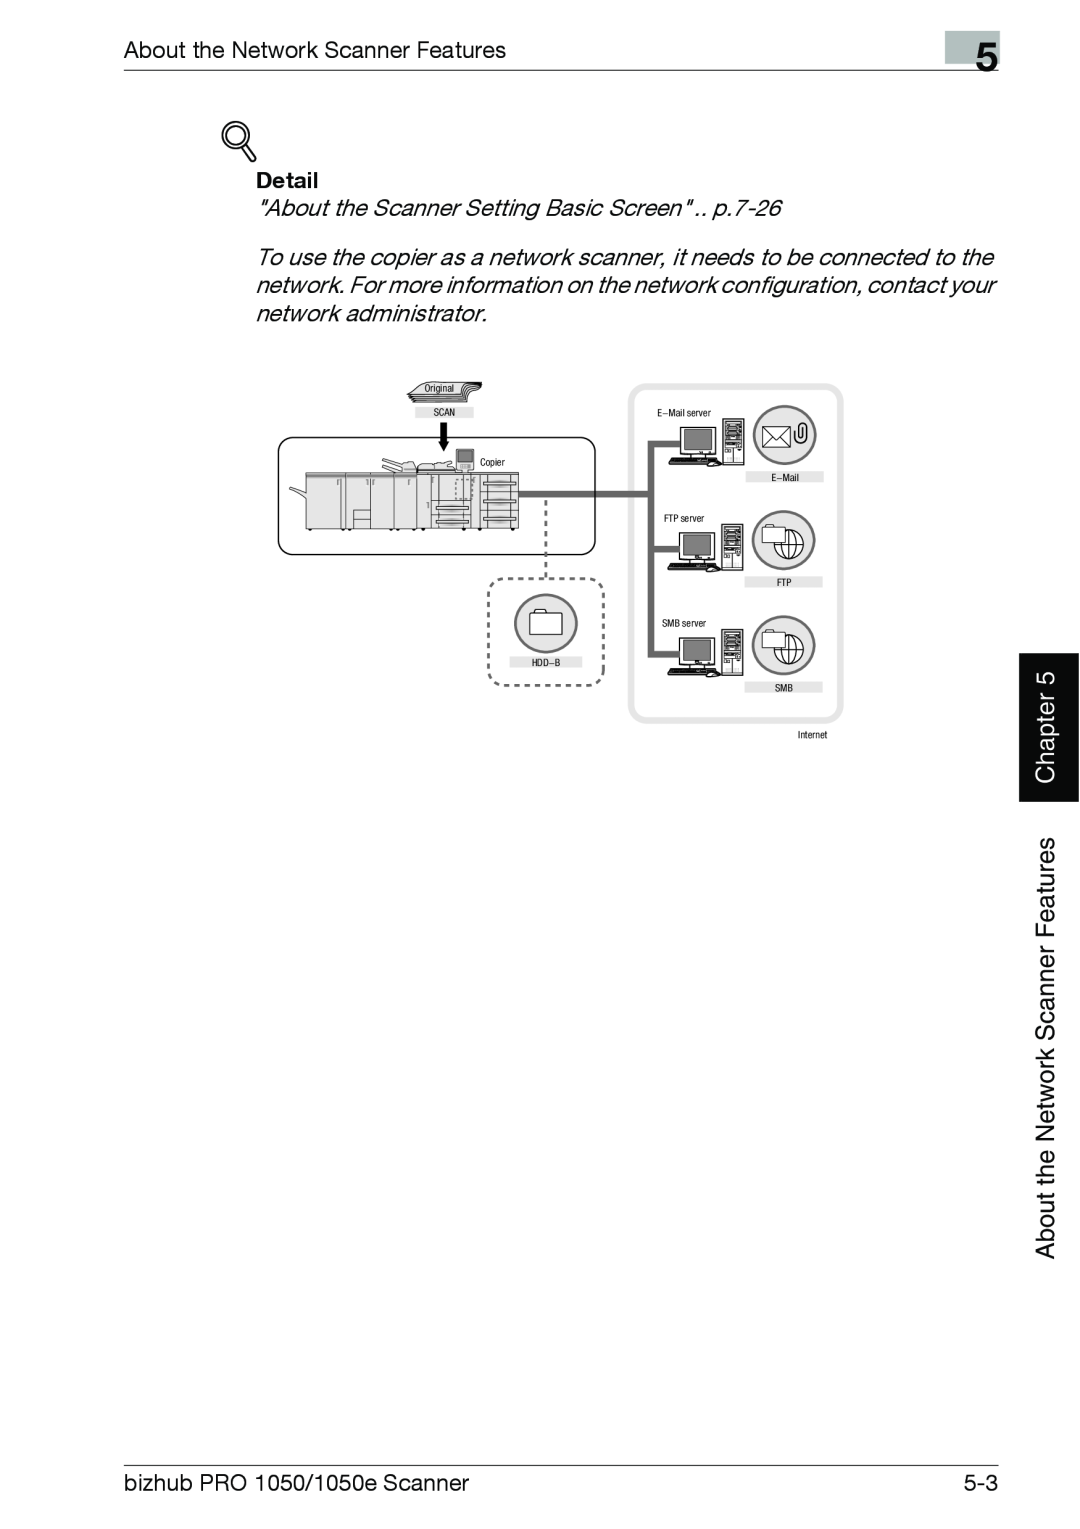 Konica Minolta 1050E appendix Chapter, About the Network Scanner Features, Detail, bizhub PRO 1050/1050e Scanner 